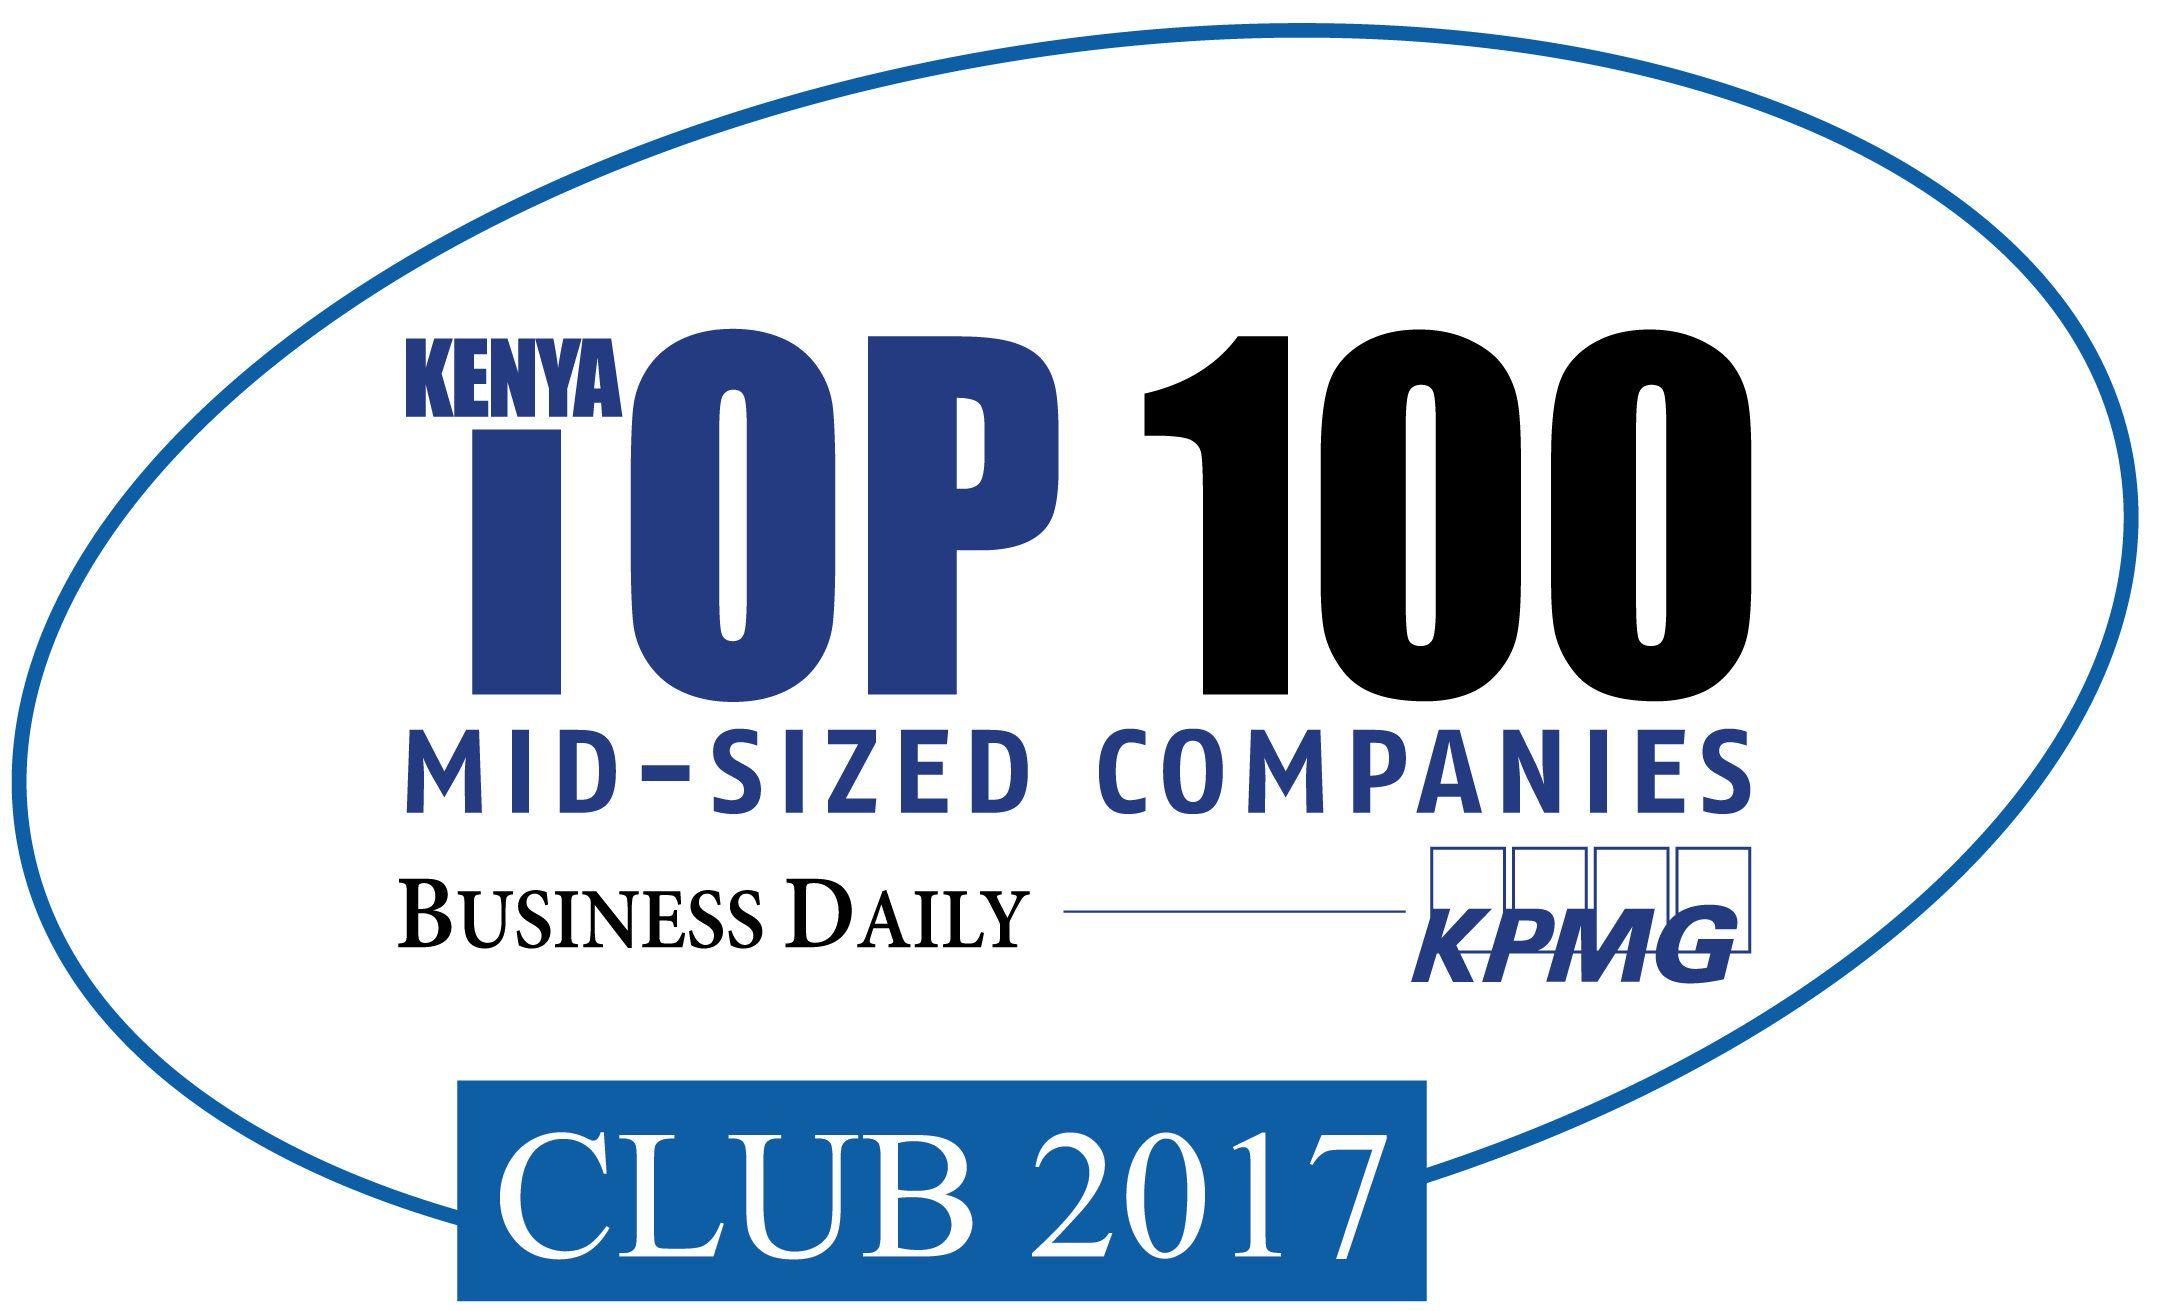 Top 100 Company Logo - Kenya Top100 Club Logo 2017 01